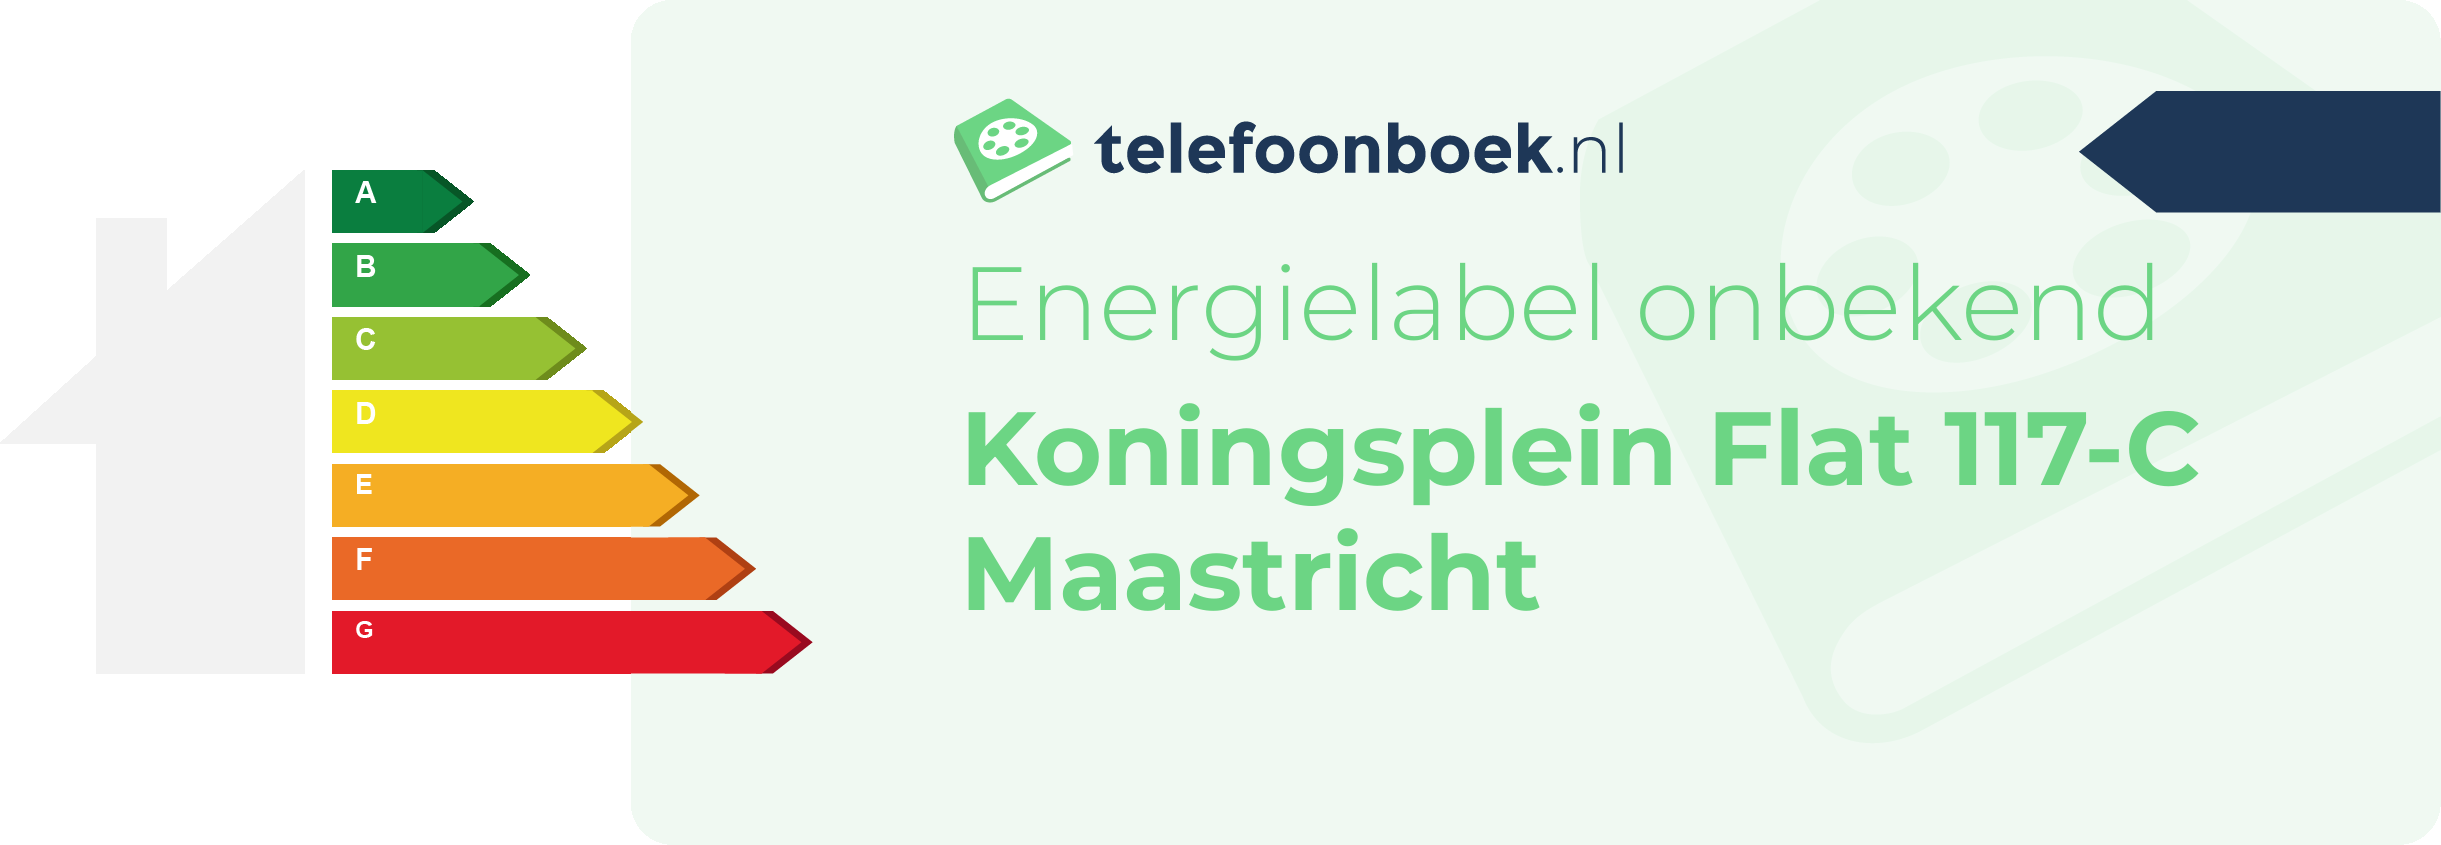 Energielabel Koningsplein Flat 117-C Maastricht